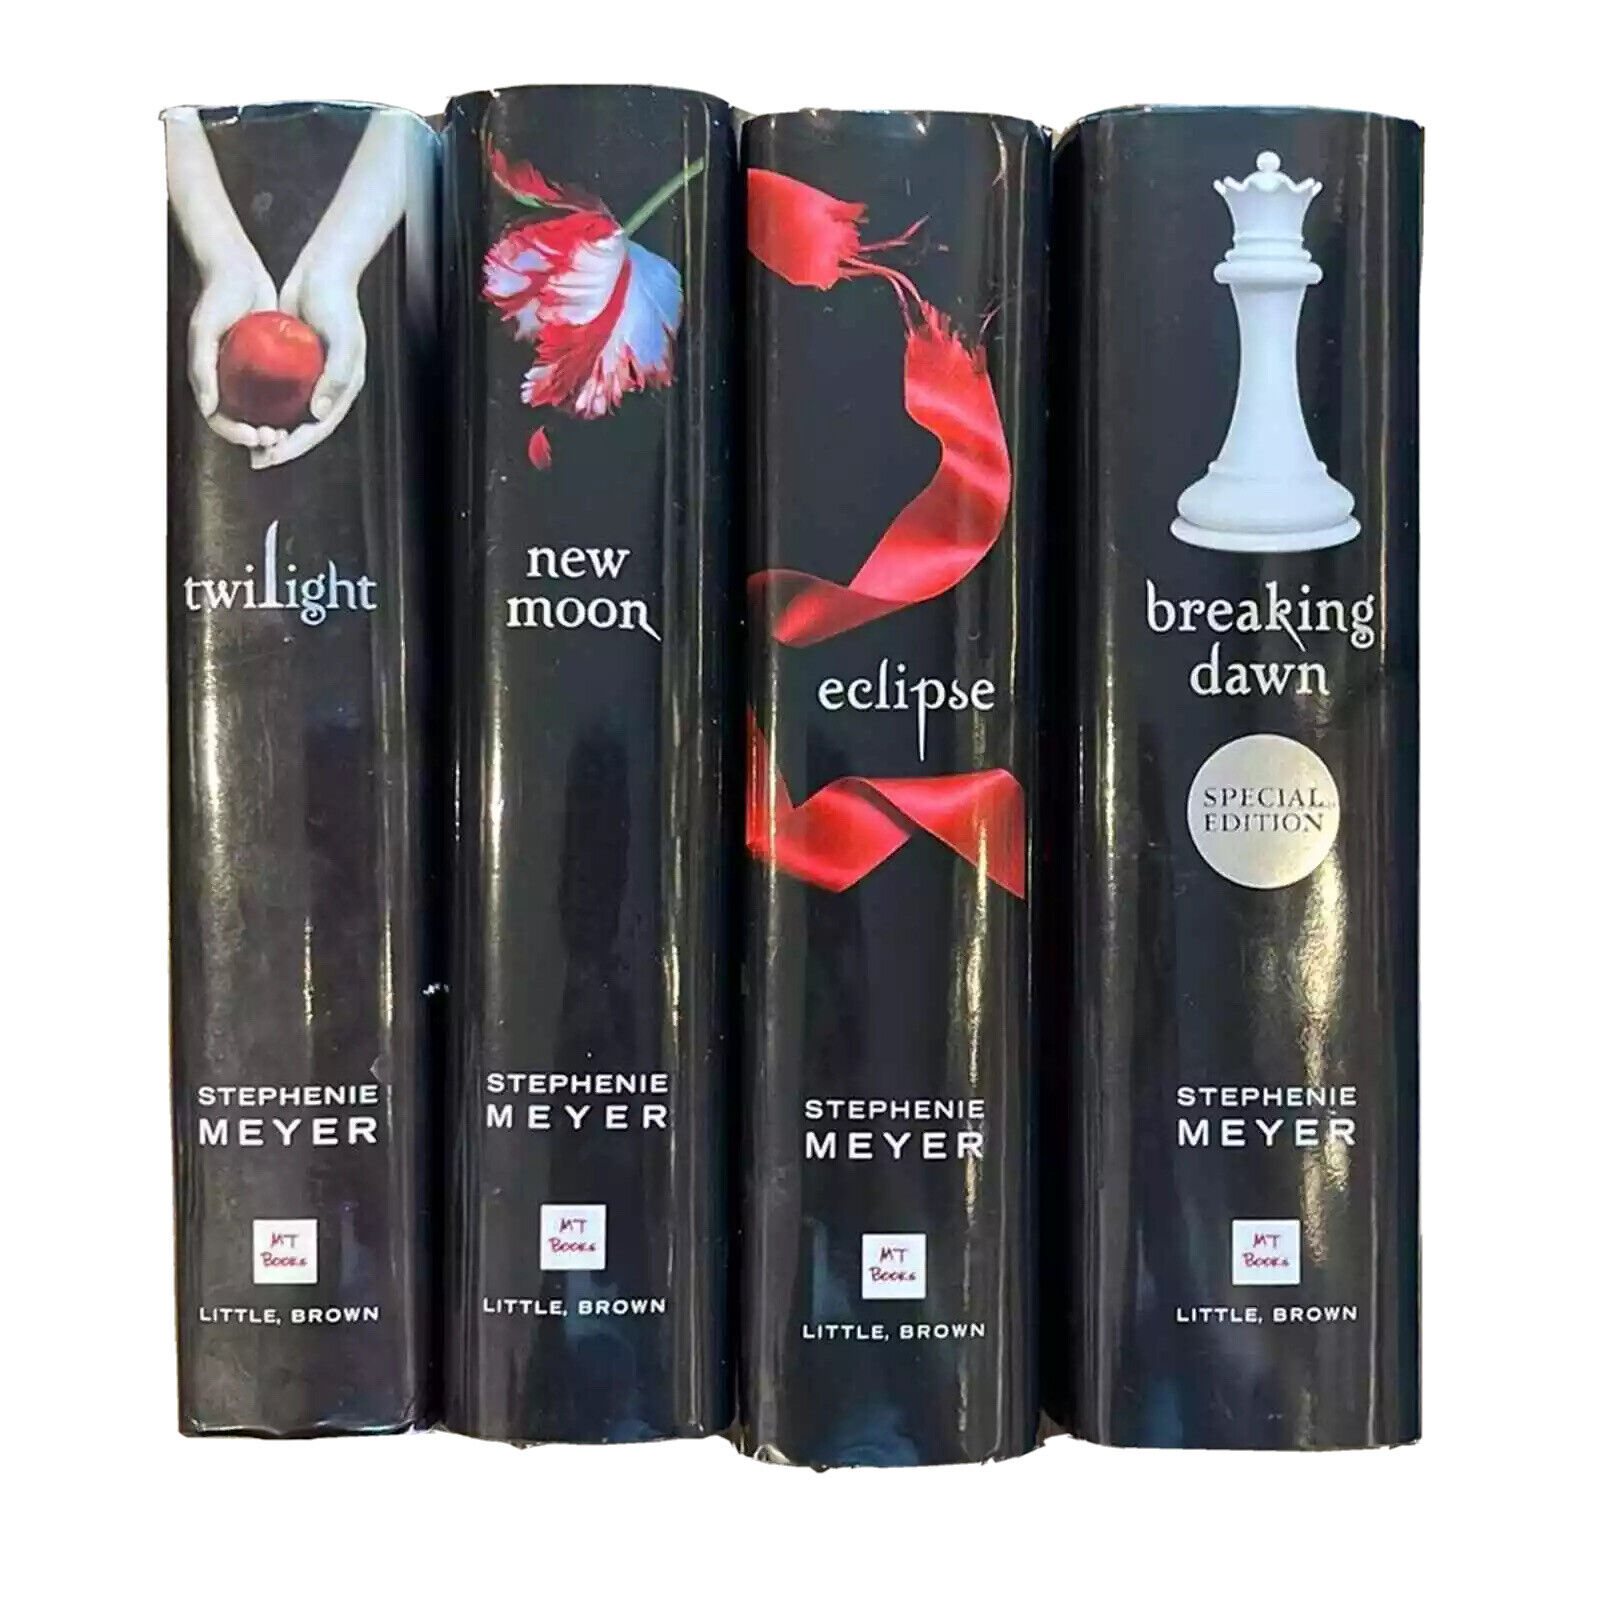 Twilight 4 Hardcover Book Set (New Moon, Eclipse, Twilight, Breaking Dawn)